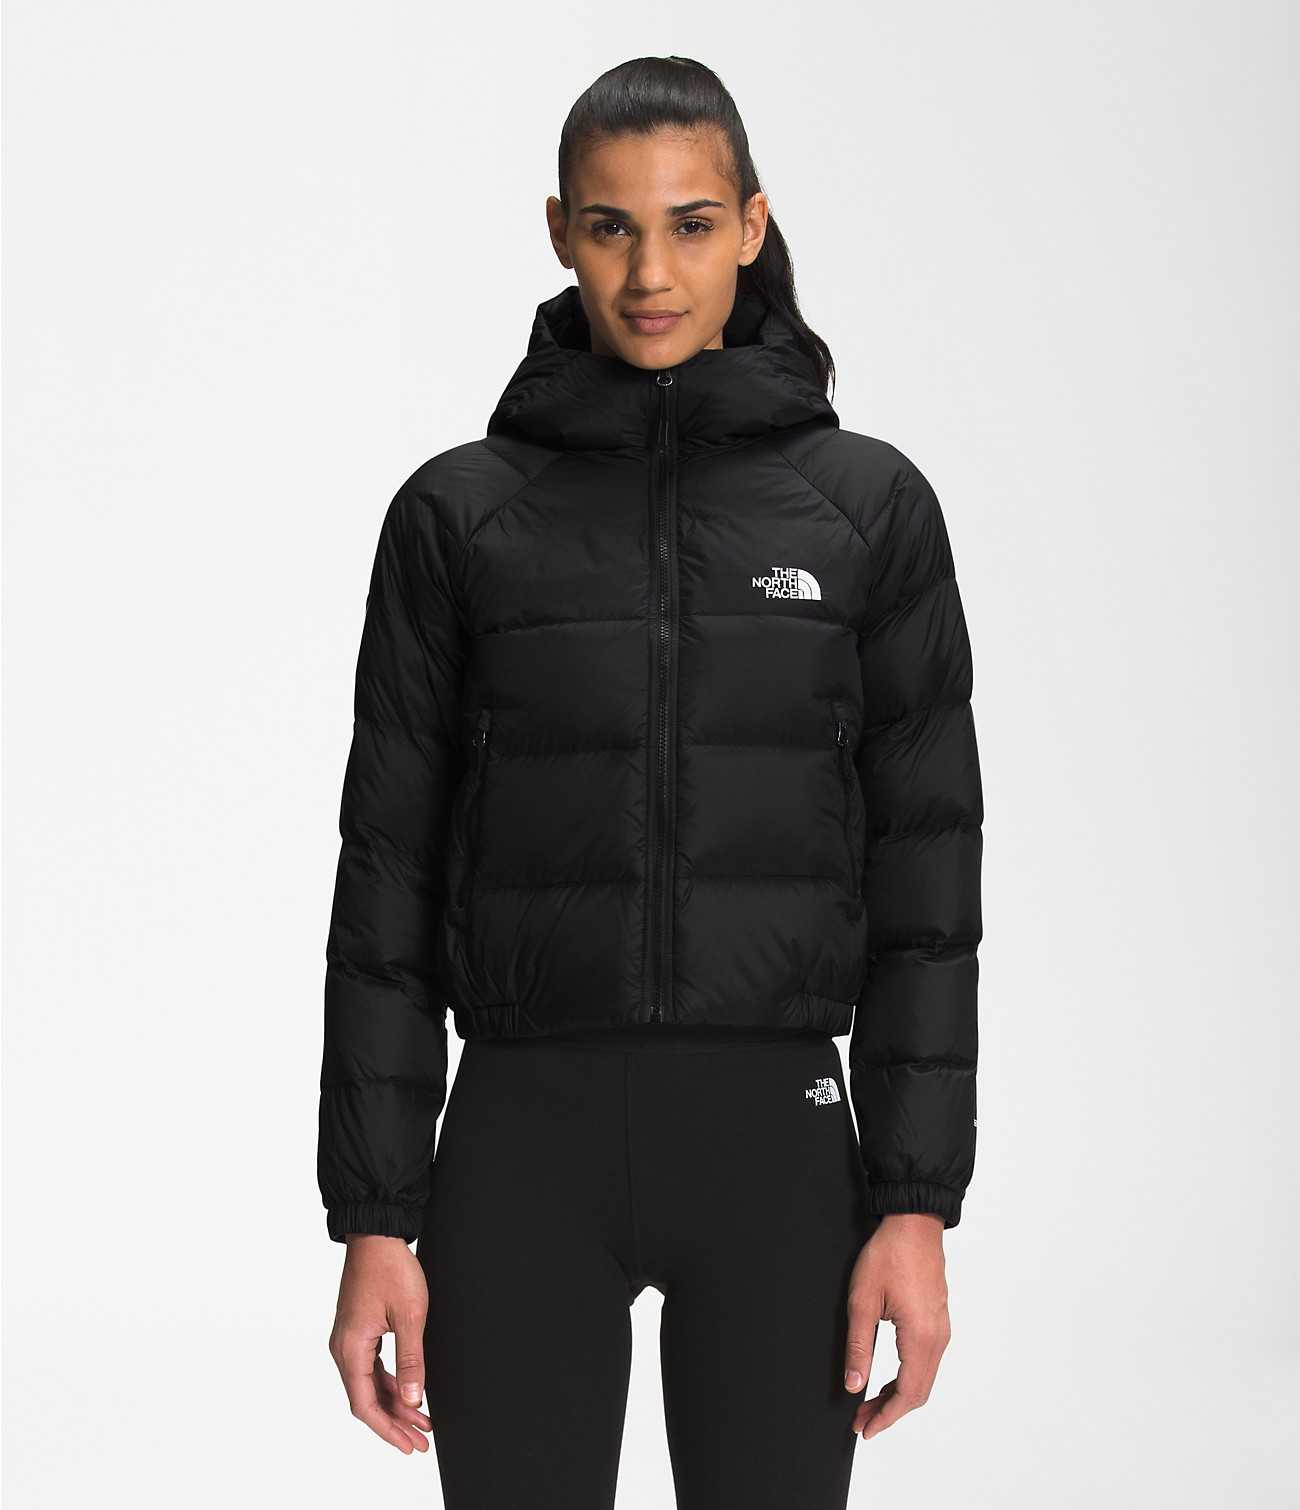 Jacket Polyester Zipper Outside Woman Jackets Cold Weather Women